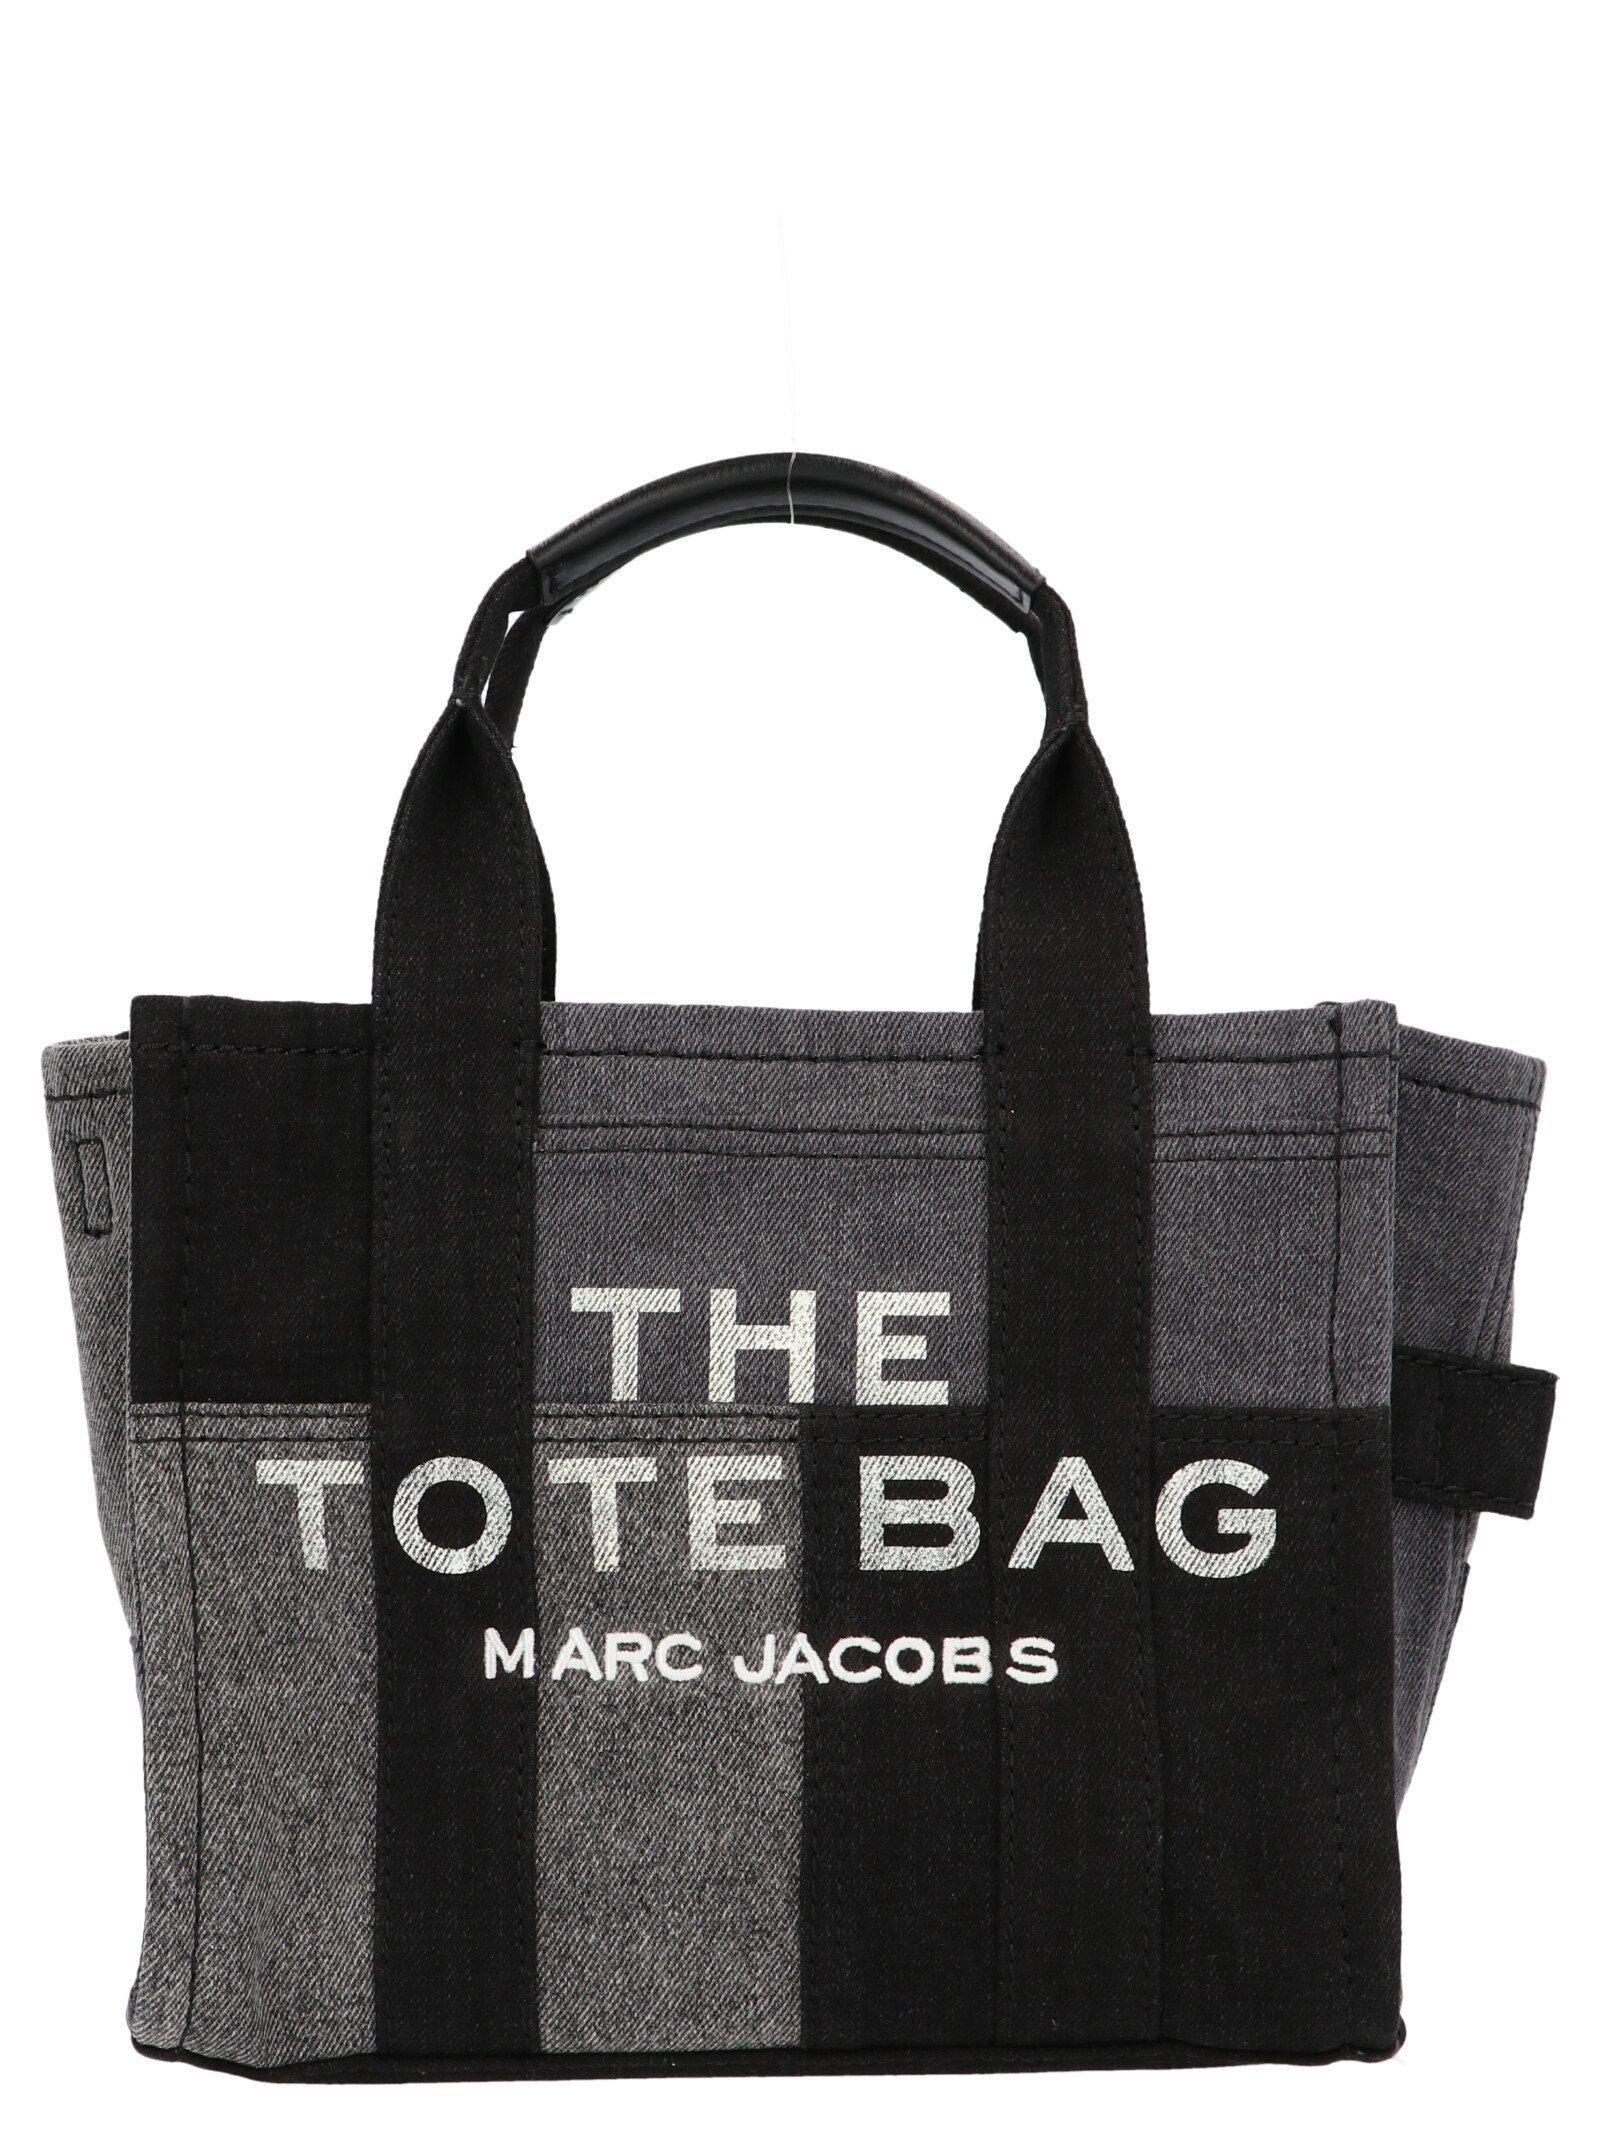 Marc Jacobs The Denim Mini Tote Bag in Black - Lyst